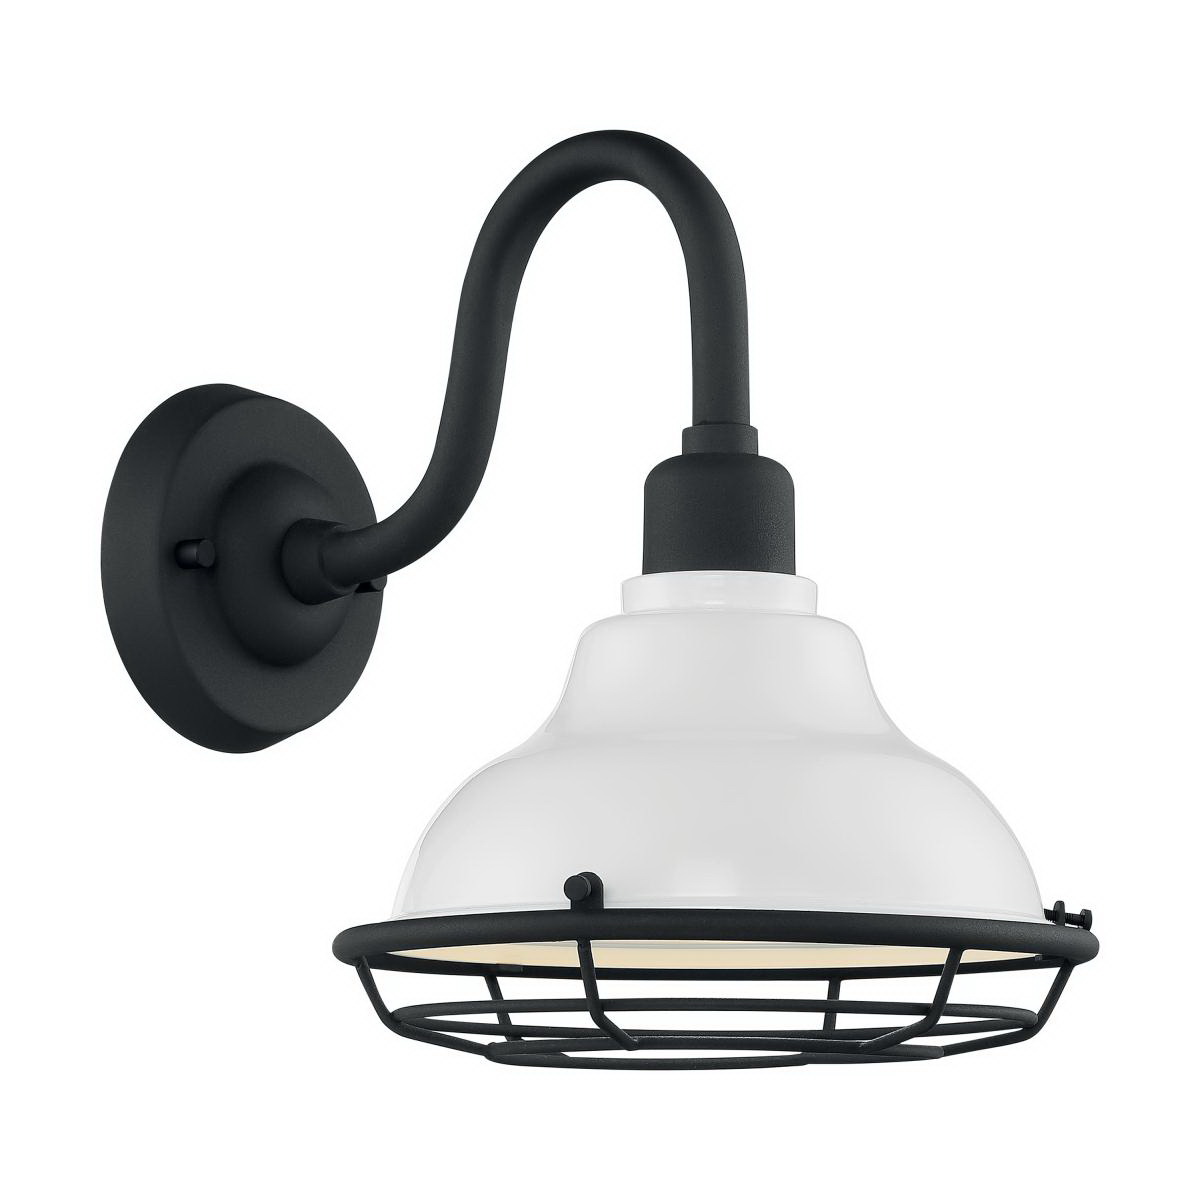 Satco Newbridge 60-7021 Sconce, 120 V, Incandescent Lamp, Steel Fixture, Gloss White/Textured Black Fixture - 1